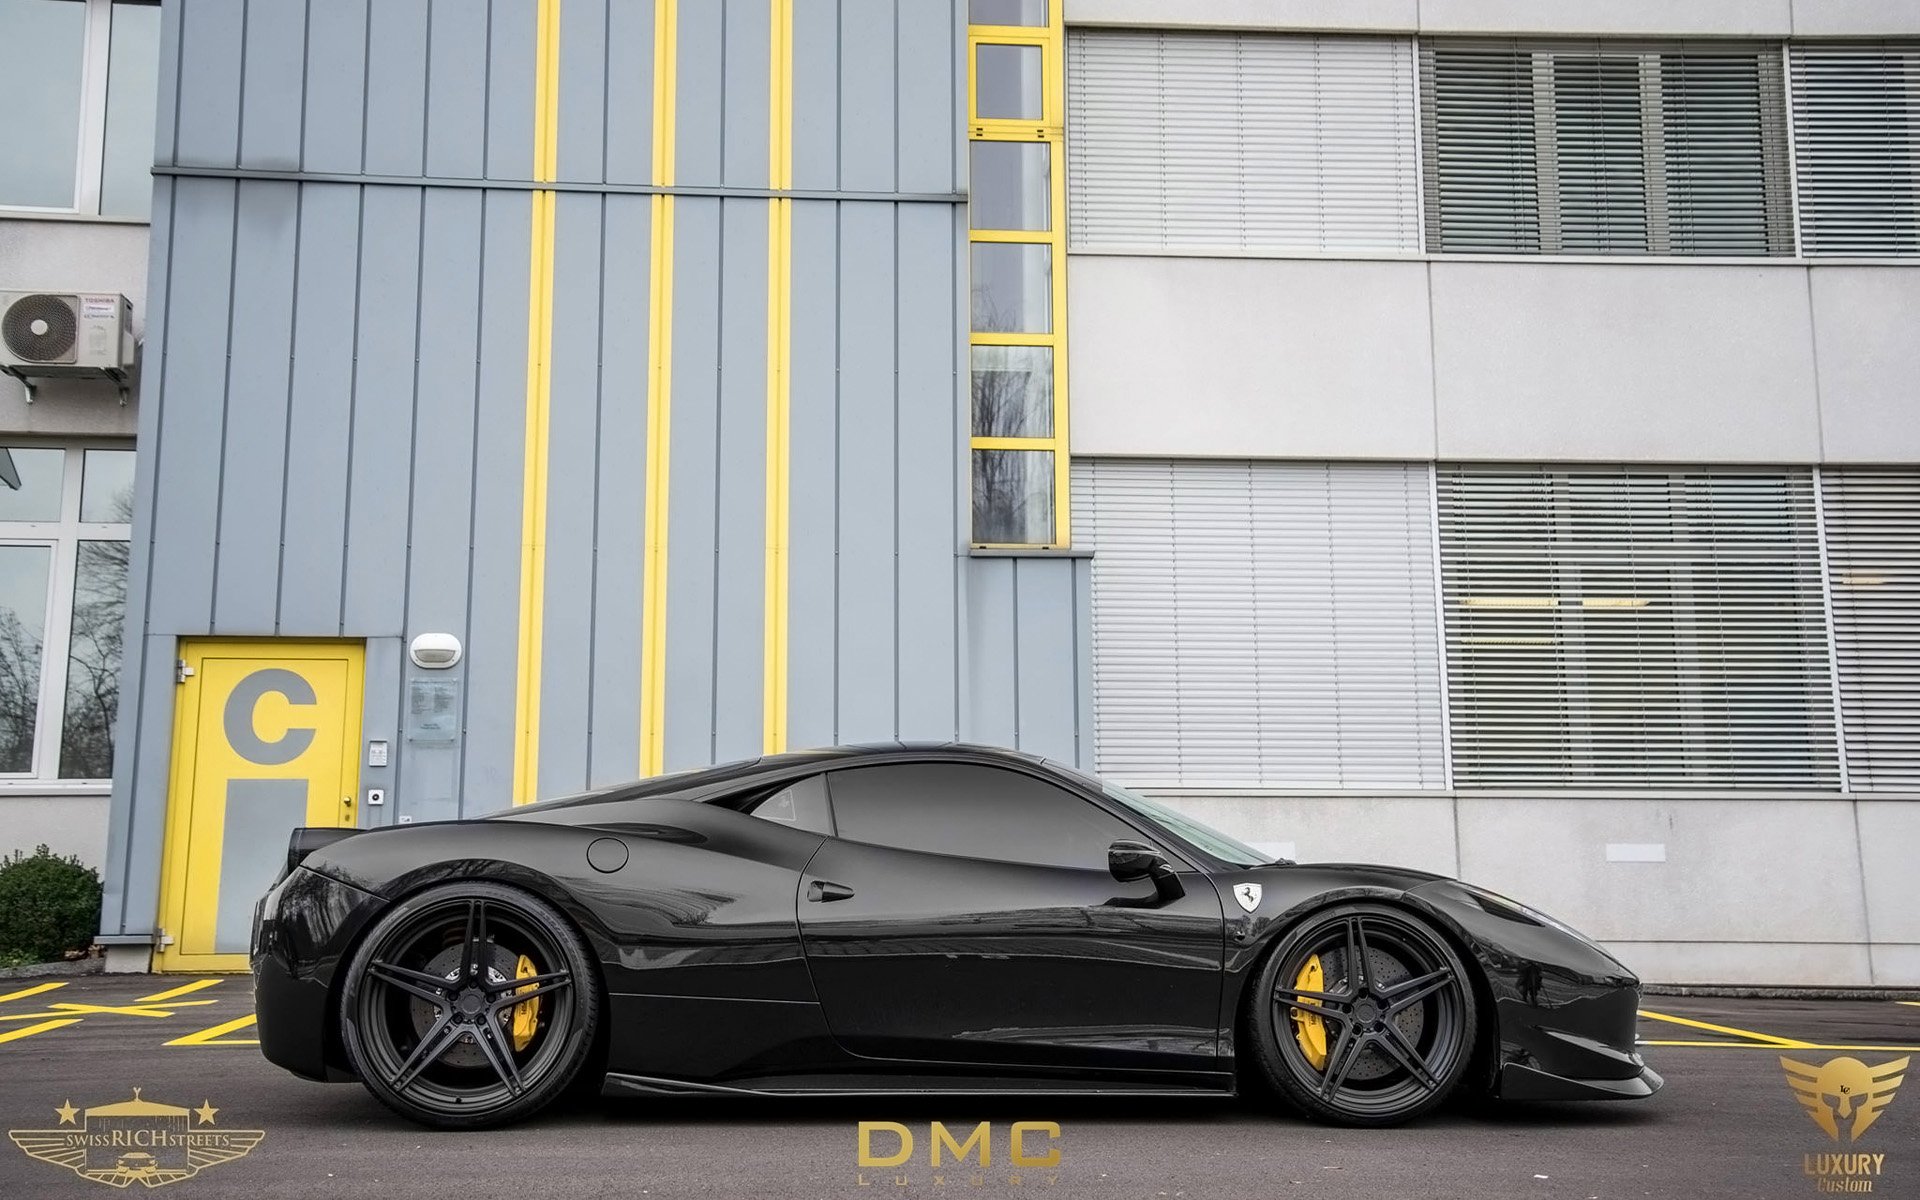 2014, Dmc, Ferrari, 458, Italia, Elegante, Supercar Wallpaper